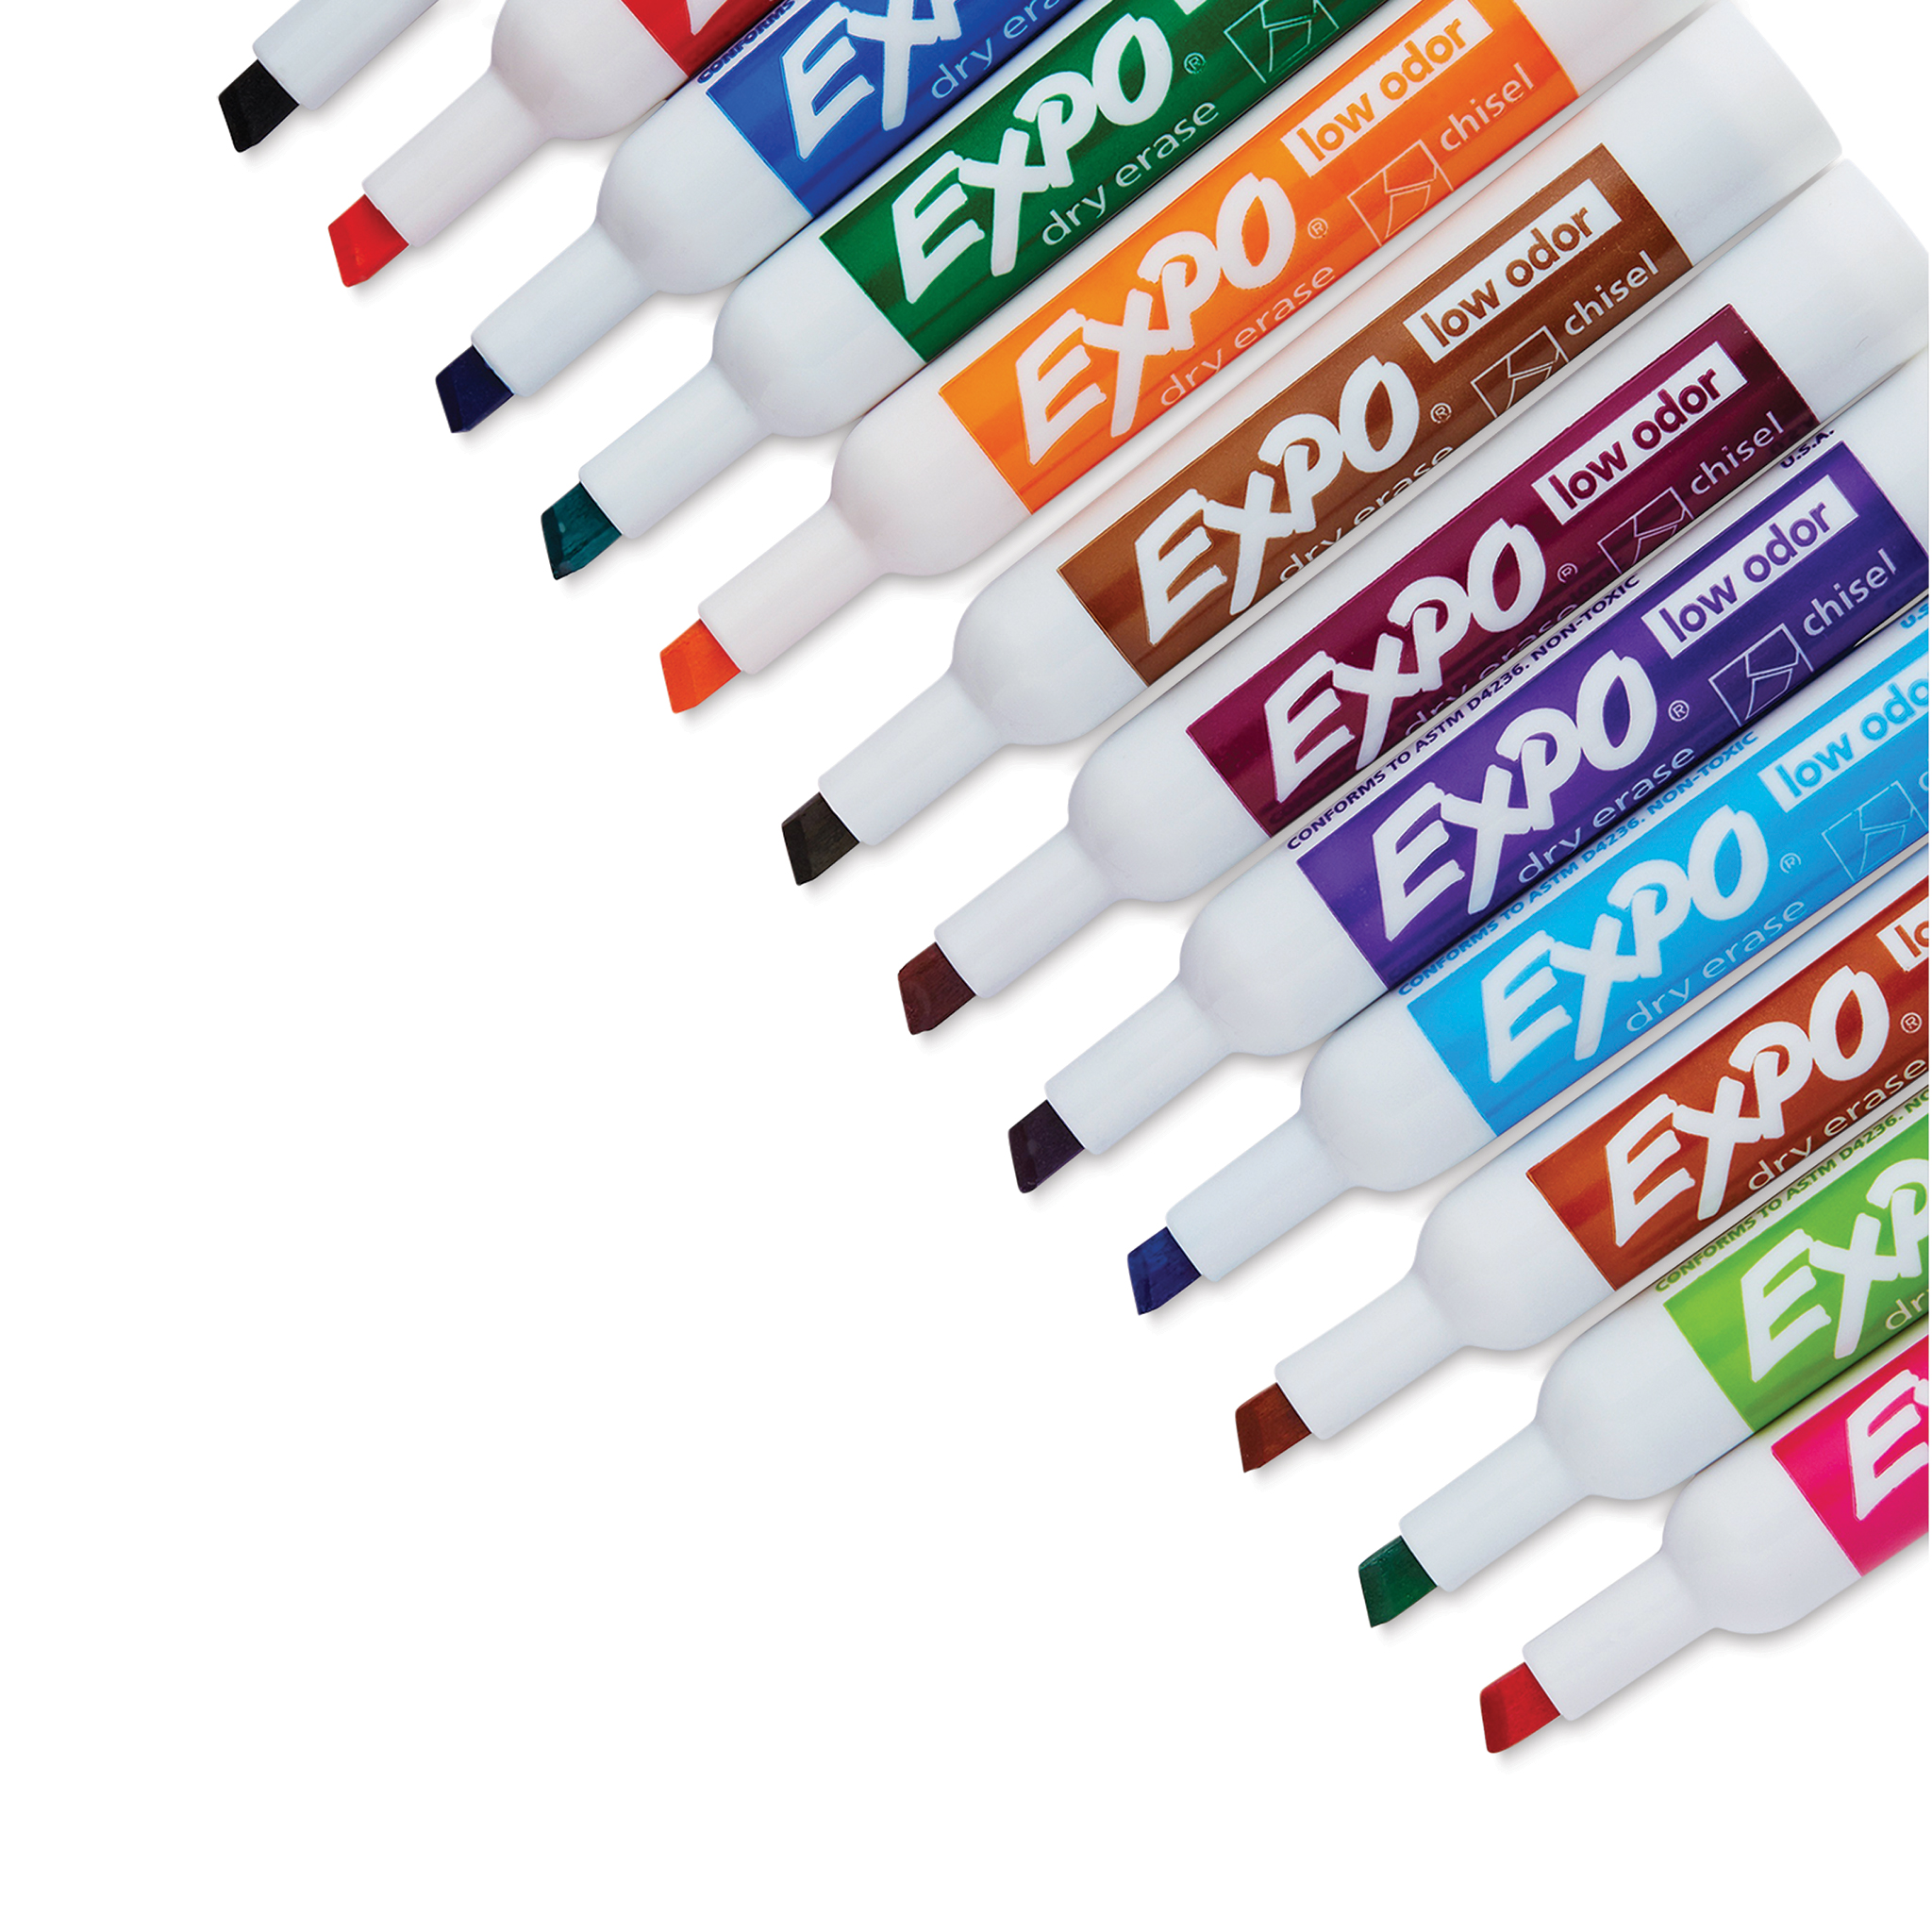 Expo Ultra-Fine Tip Dry Erase Markers - Set of 4, Black, BLICK Art  Materials